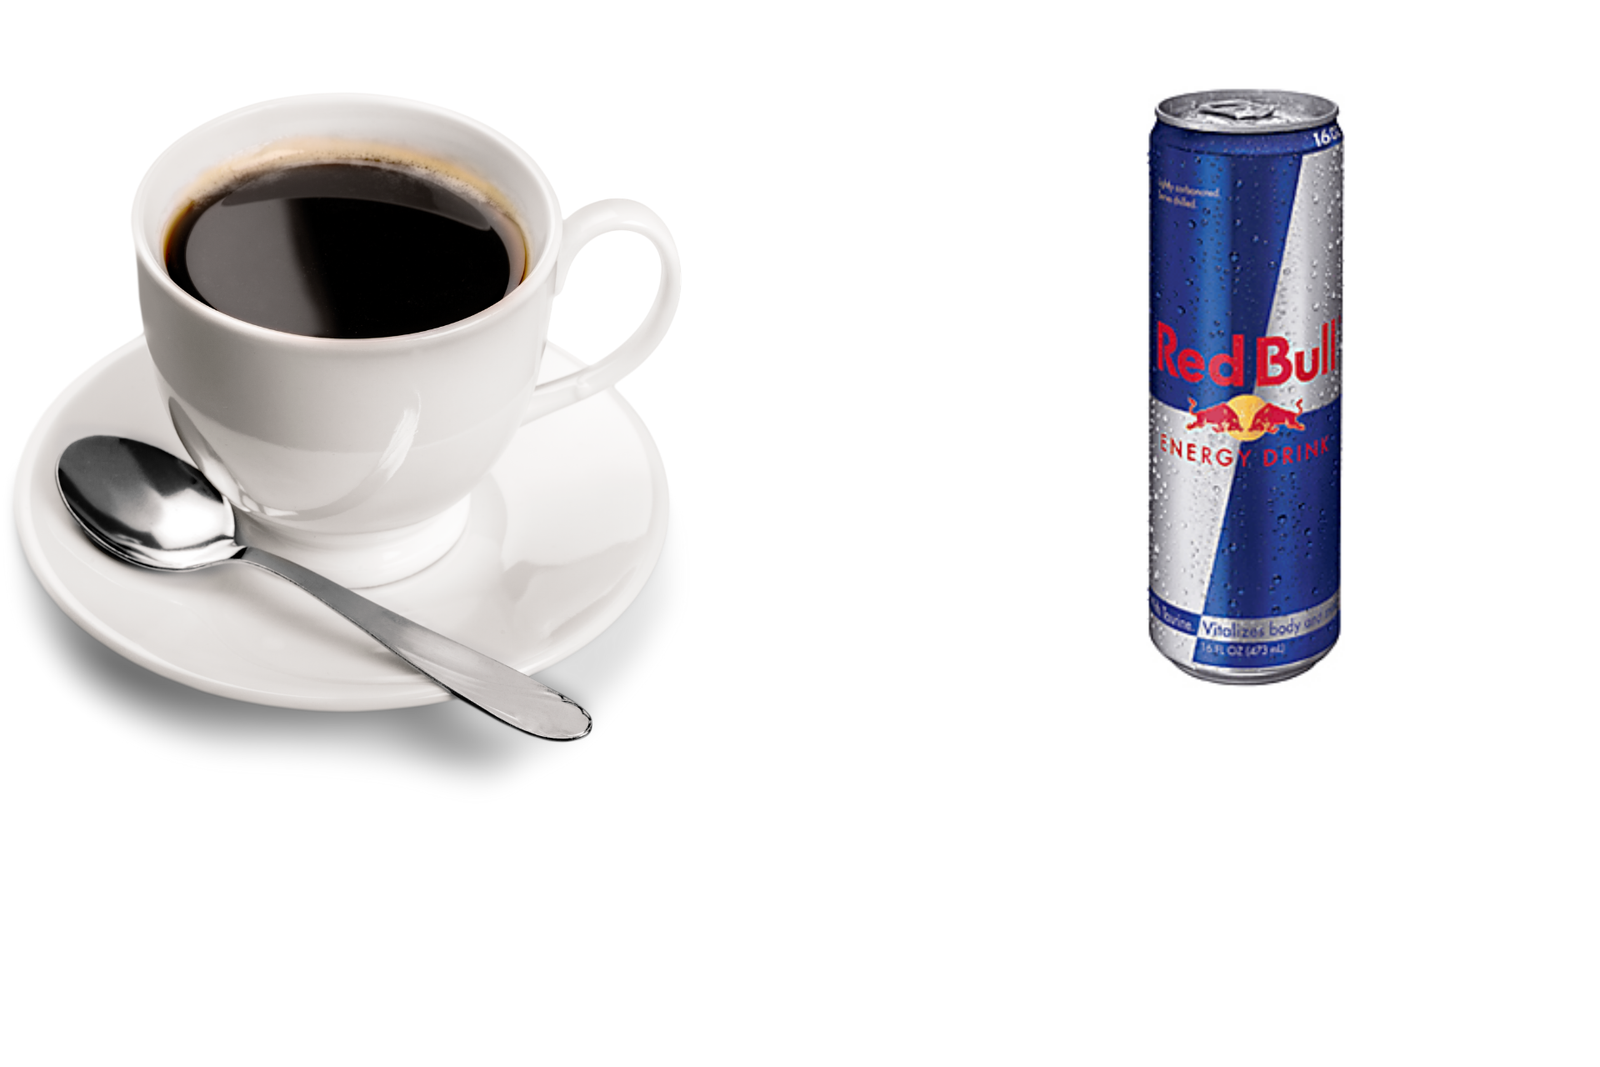 Coffee vs Red Bull